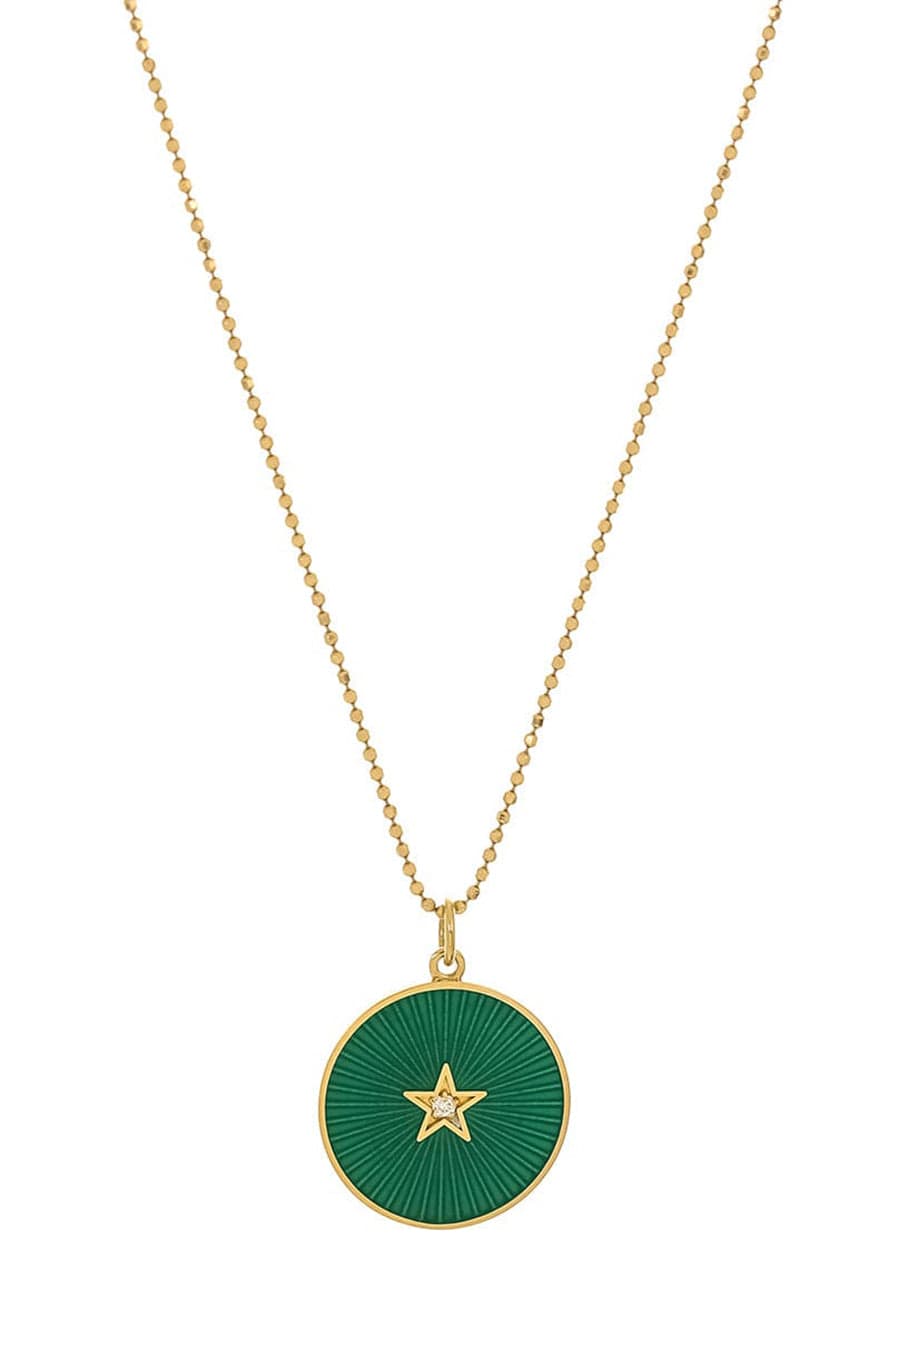 ANDREA FOHRMAN-Full Moon Star Pendant Necklace-YELLOW GOLD